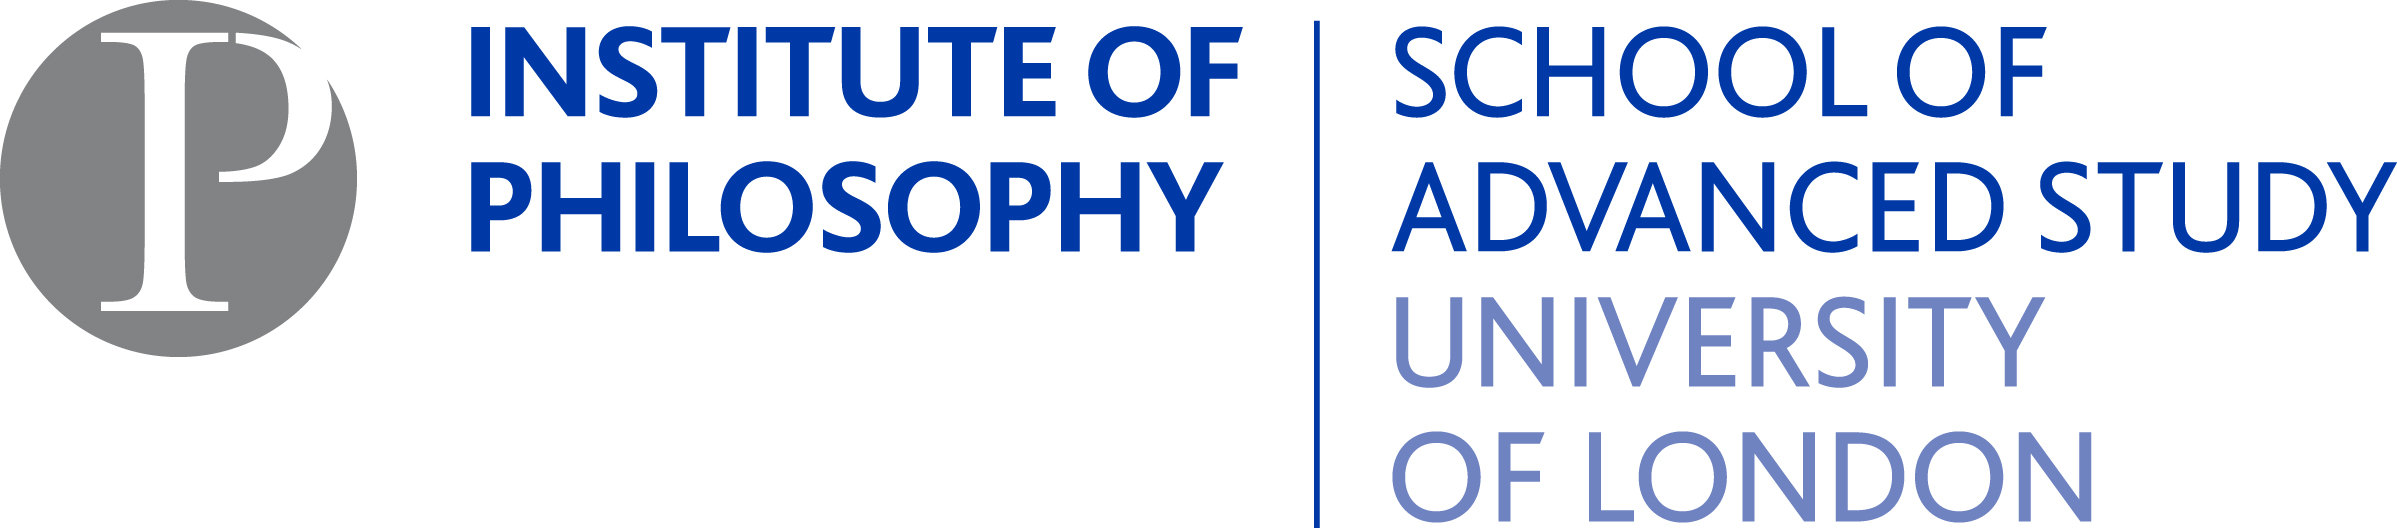 Logo of the Institute of Philosophy, School of Advanced Study, University of London